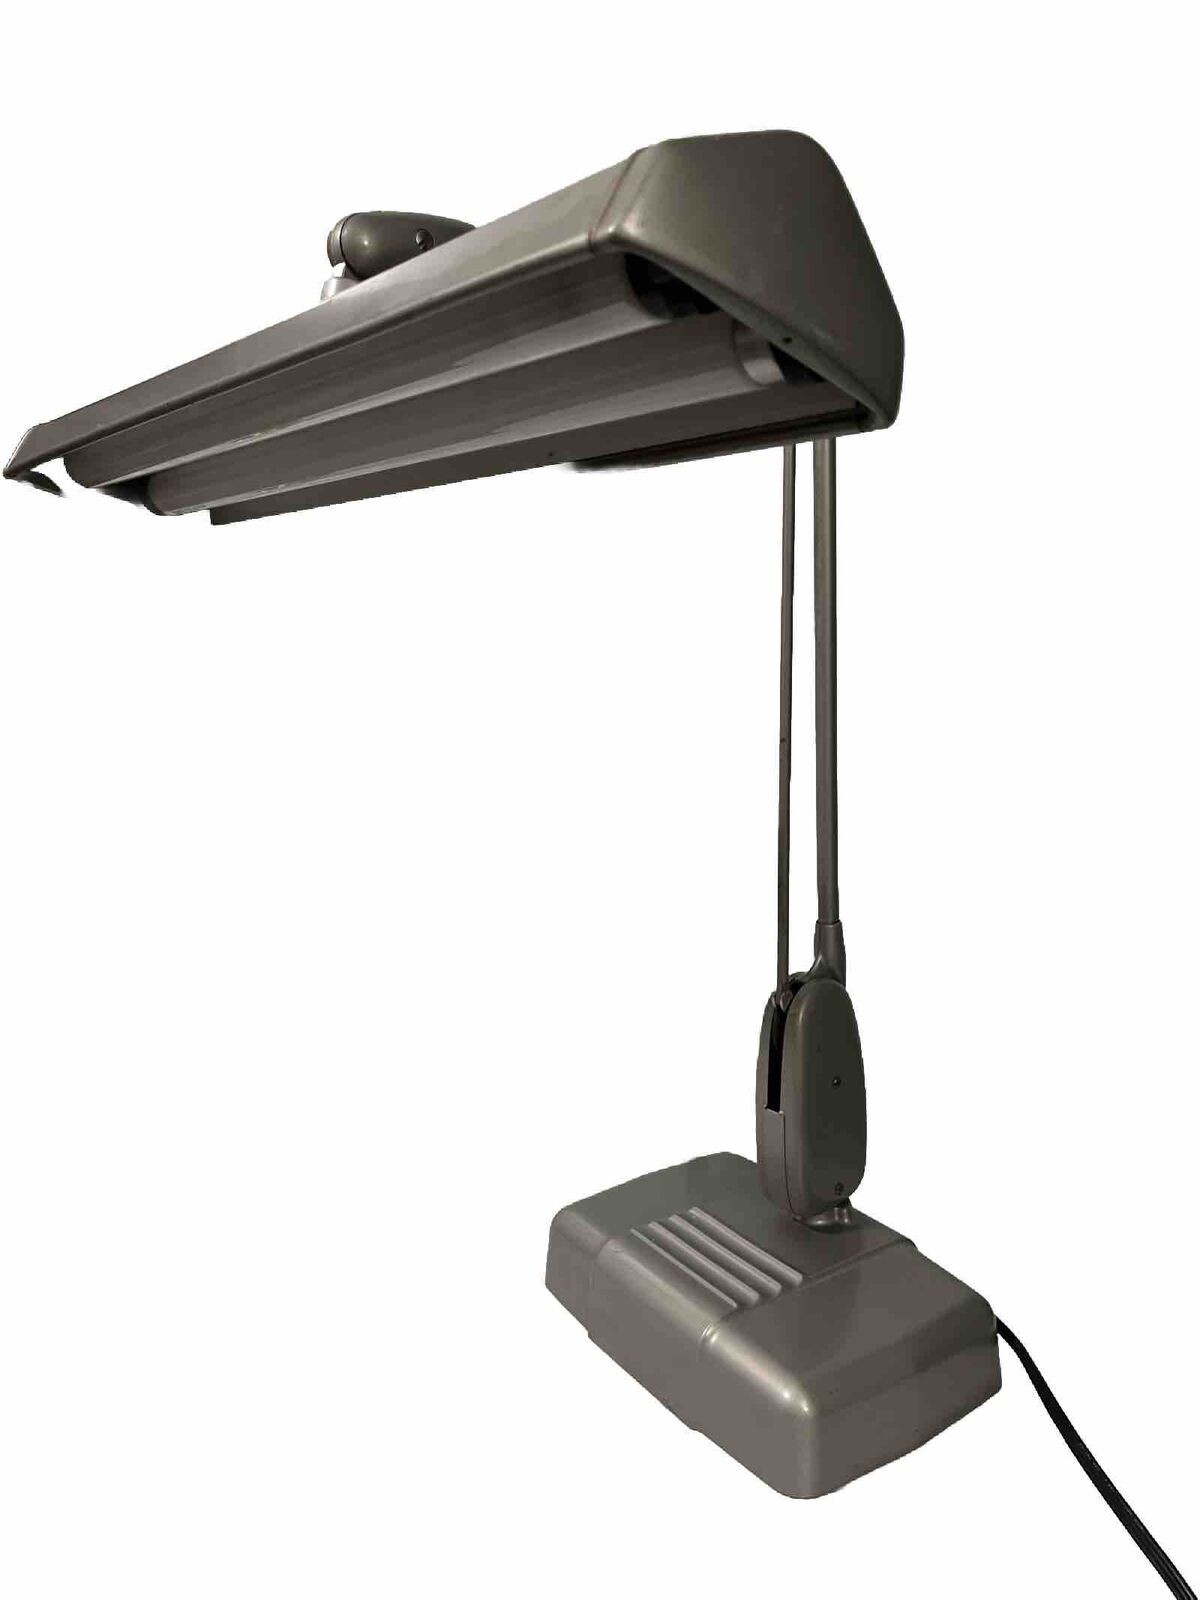 Dazor Desk Drafting Lamp Model P-2324 Floating Fixture 118 Volts Industrial